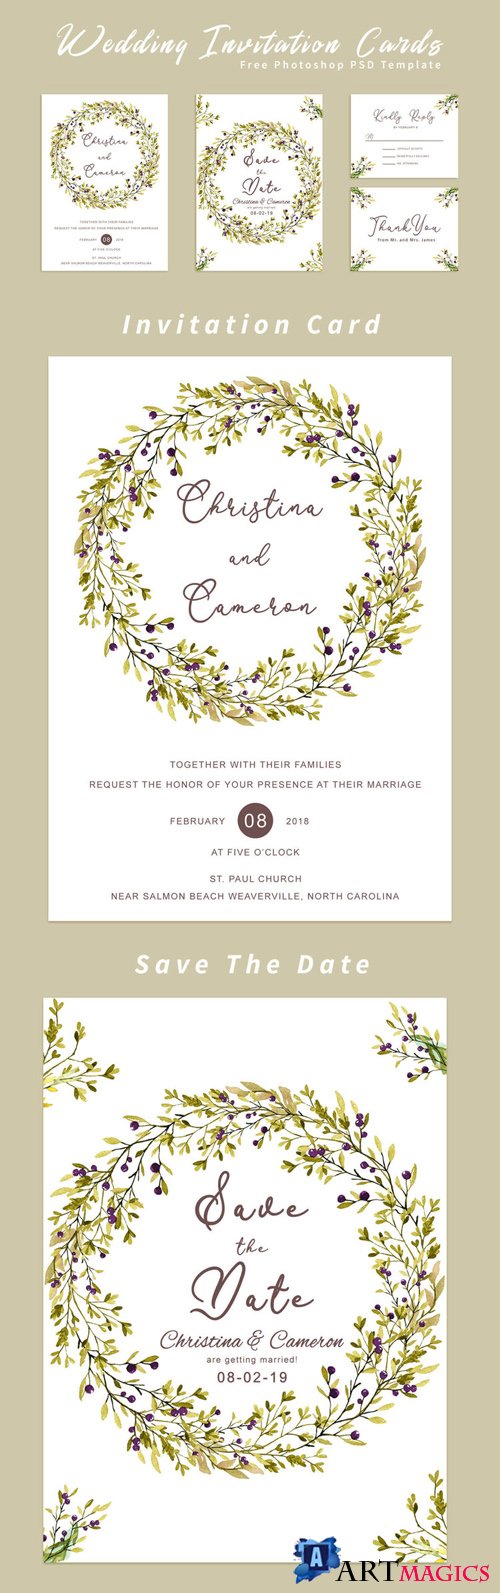 Wedding Invitation Cards - PSD Template